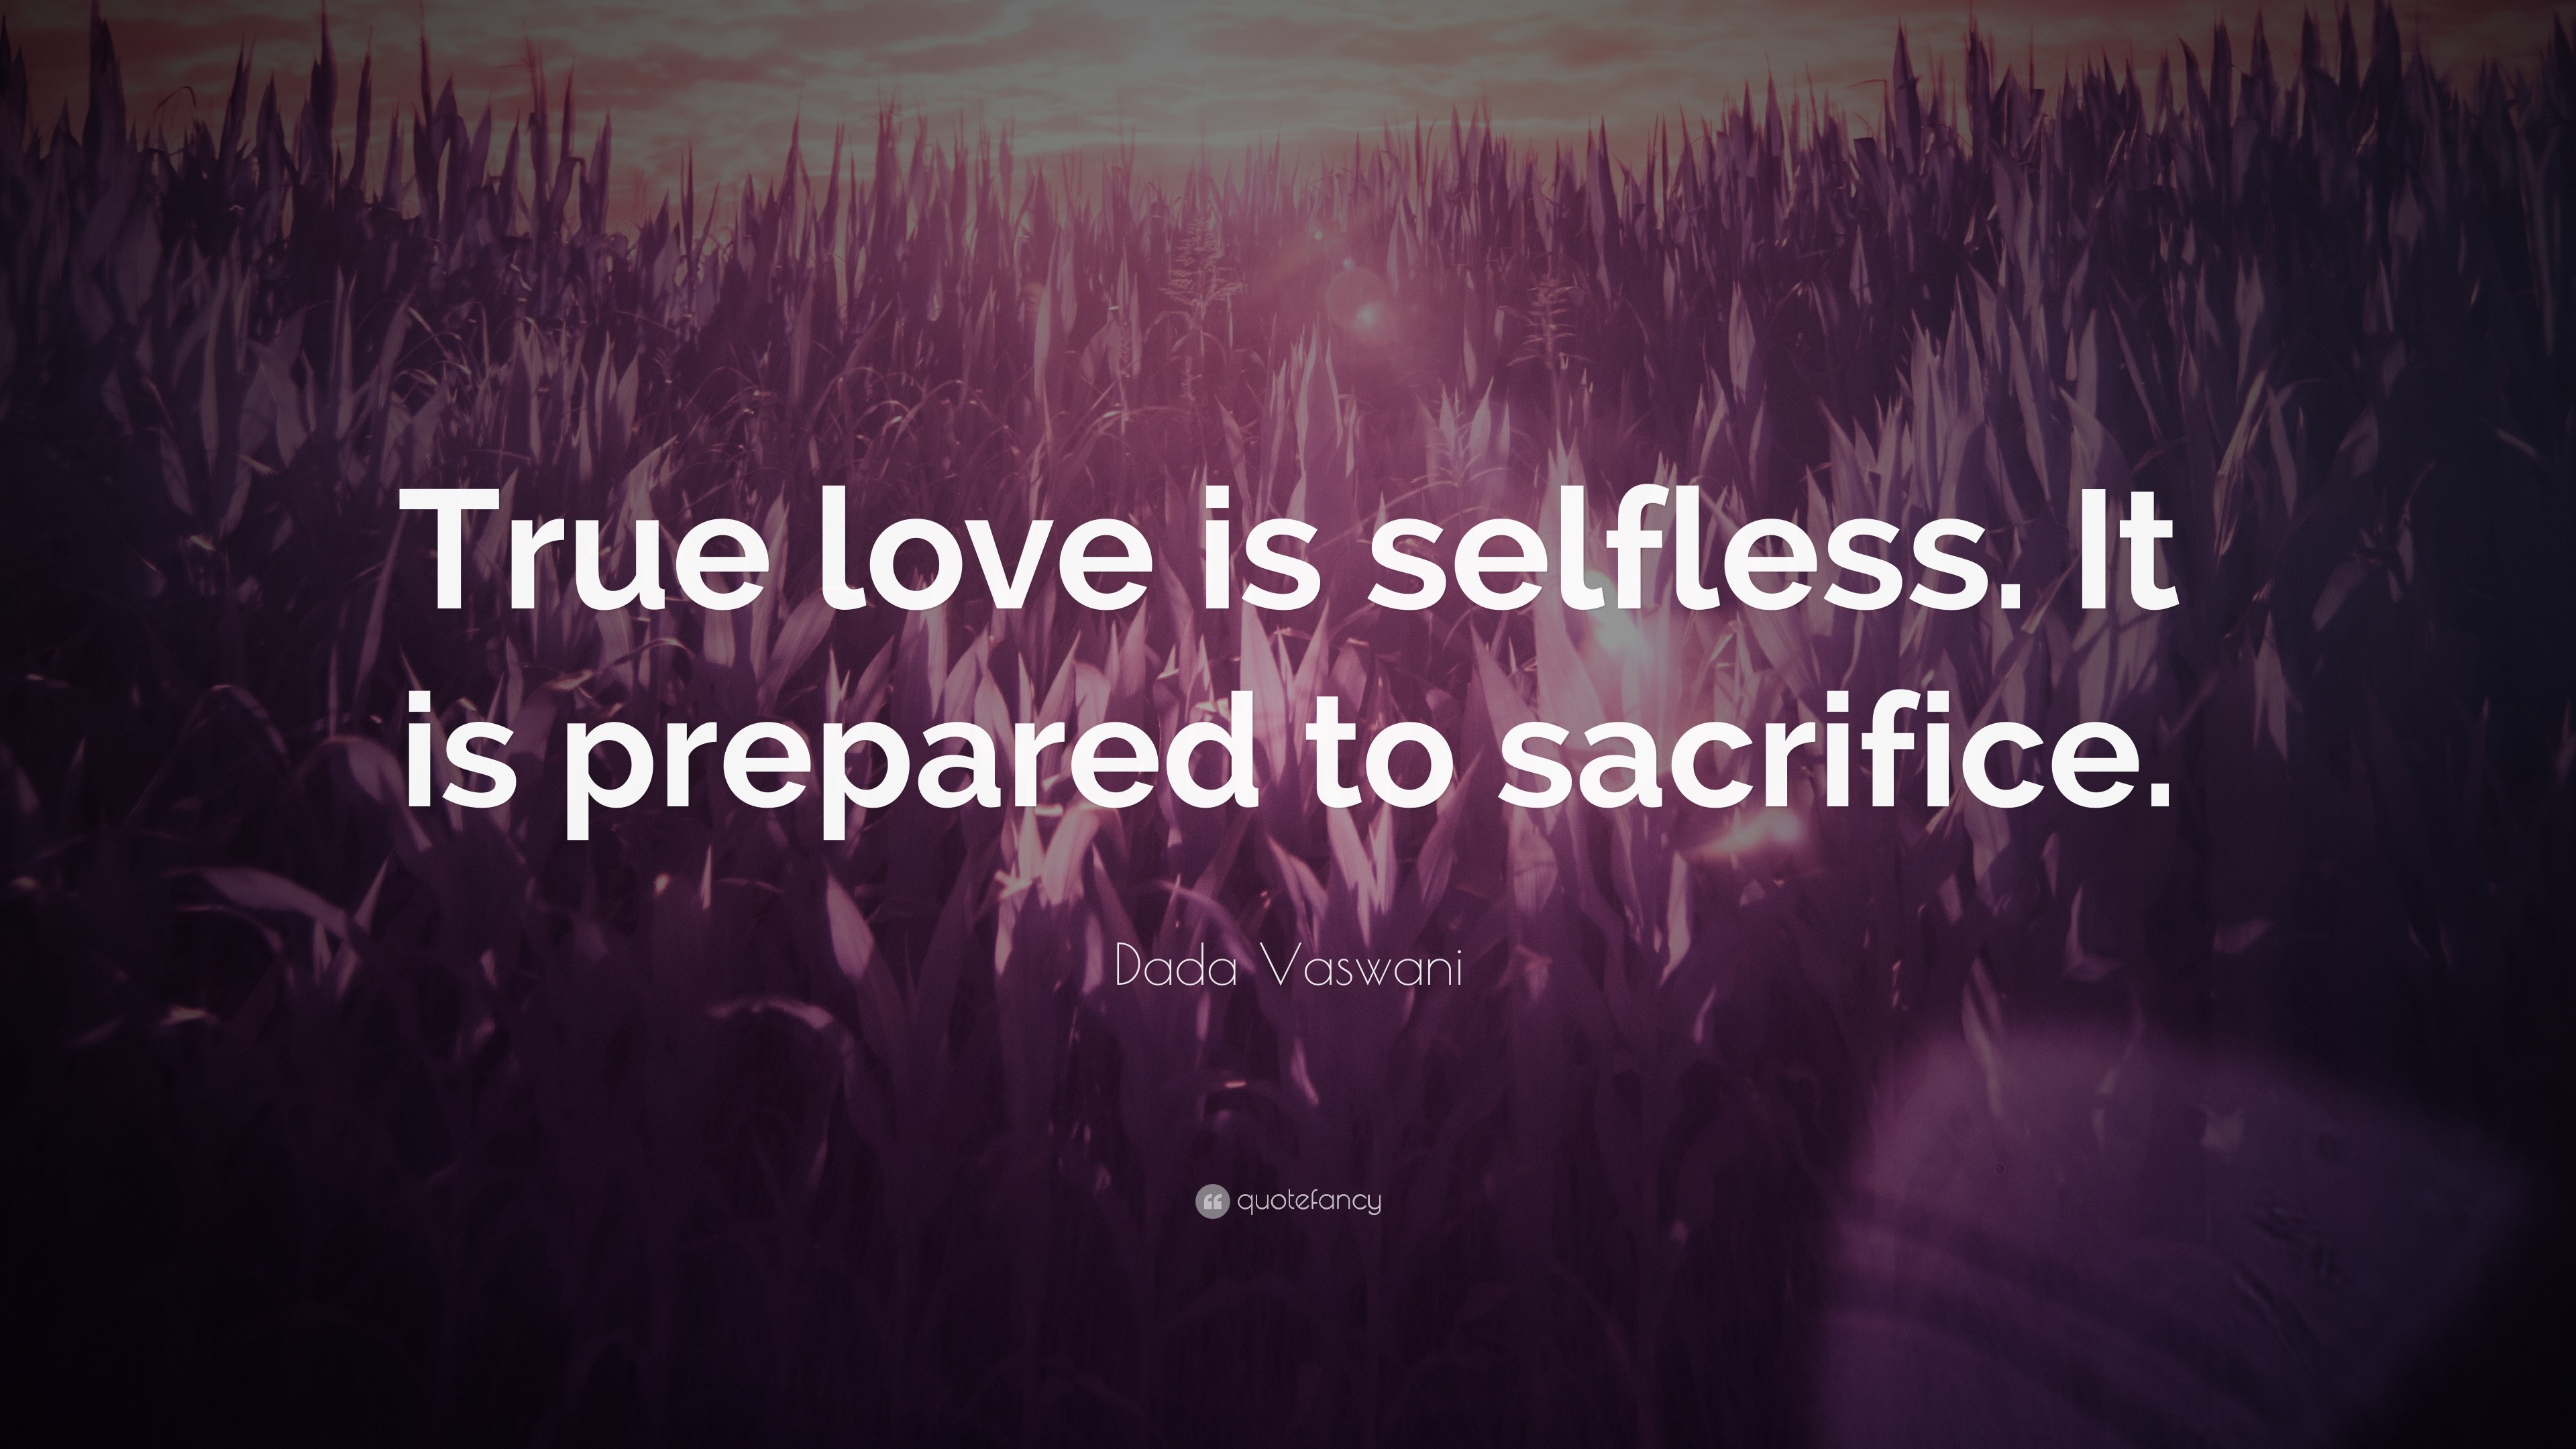 Dada Vaswani Quote “True love is selfless It is prepared to sacrifice